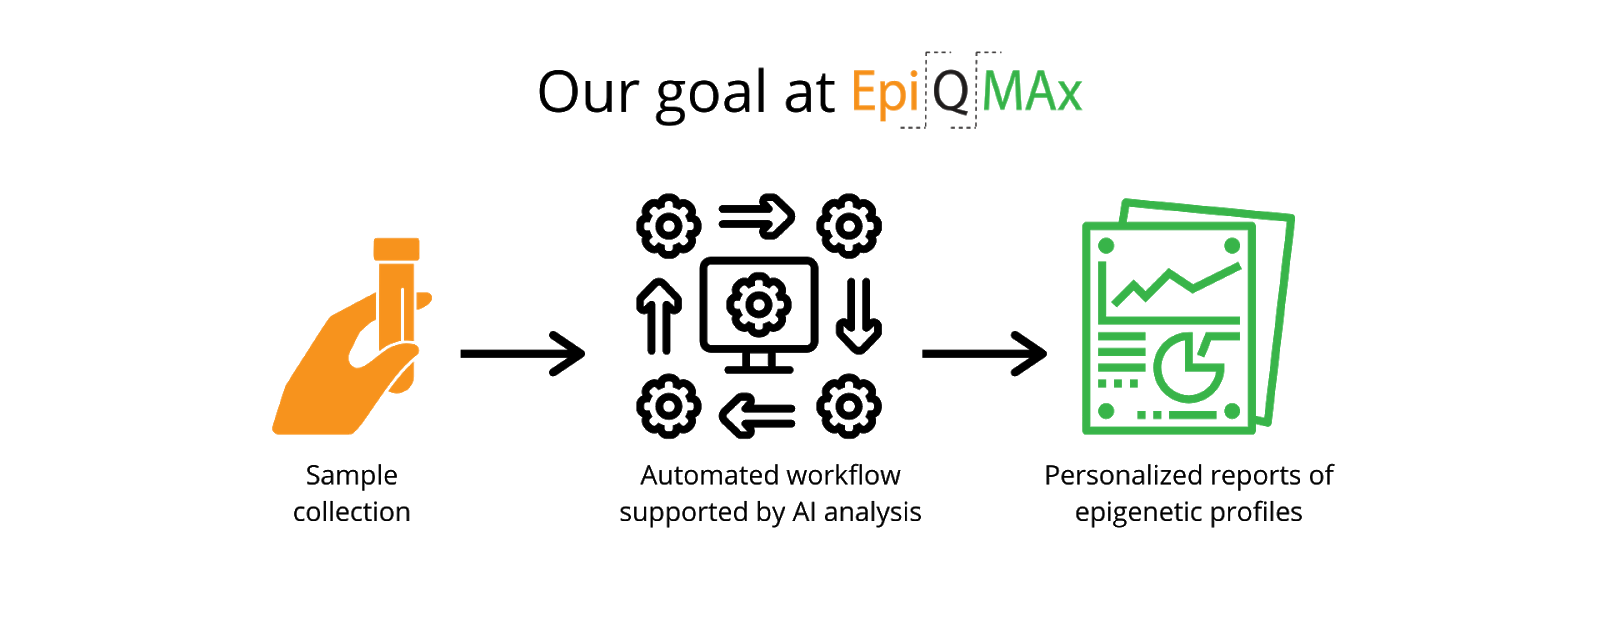 EpiQMAx product vision